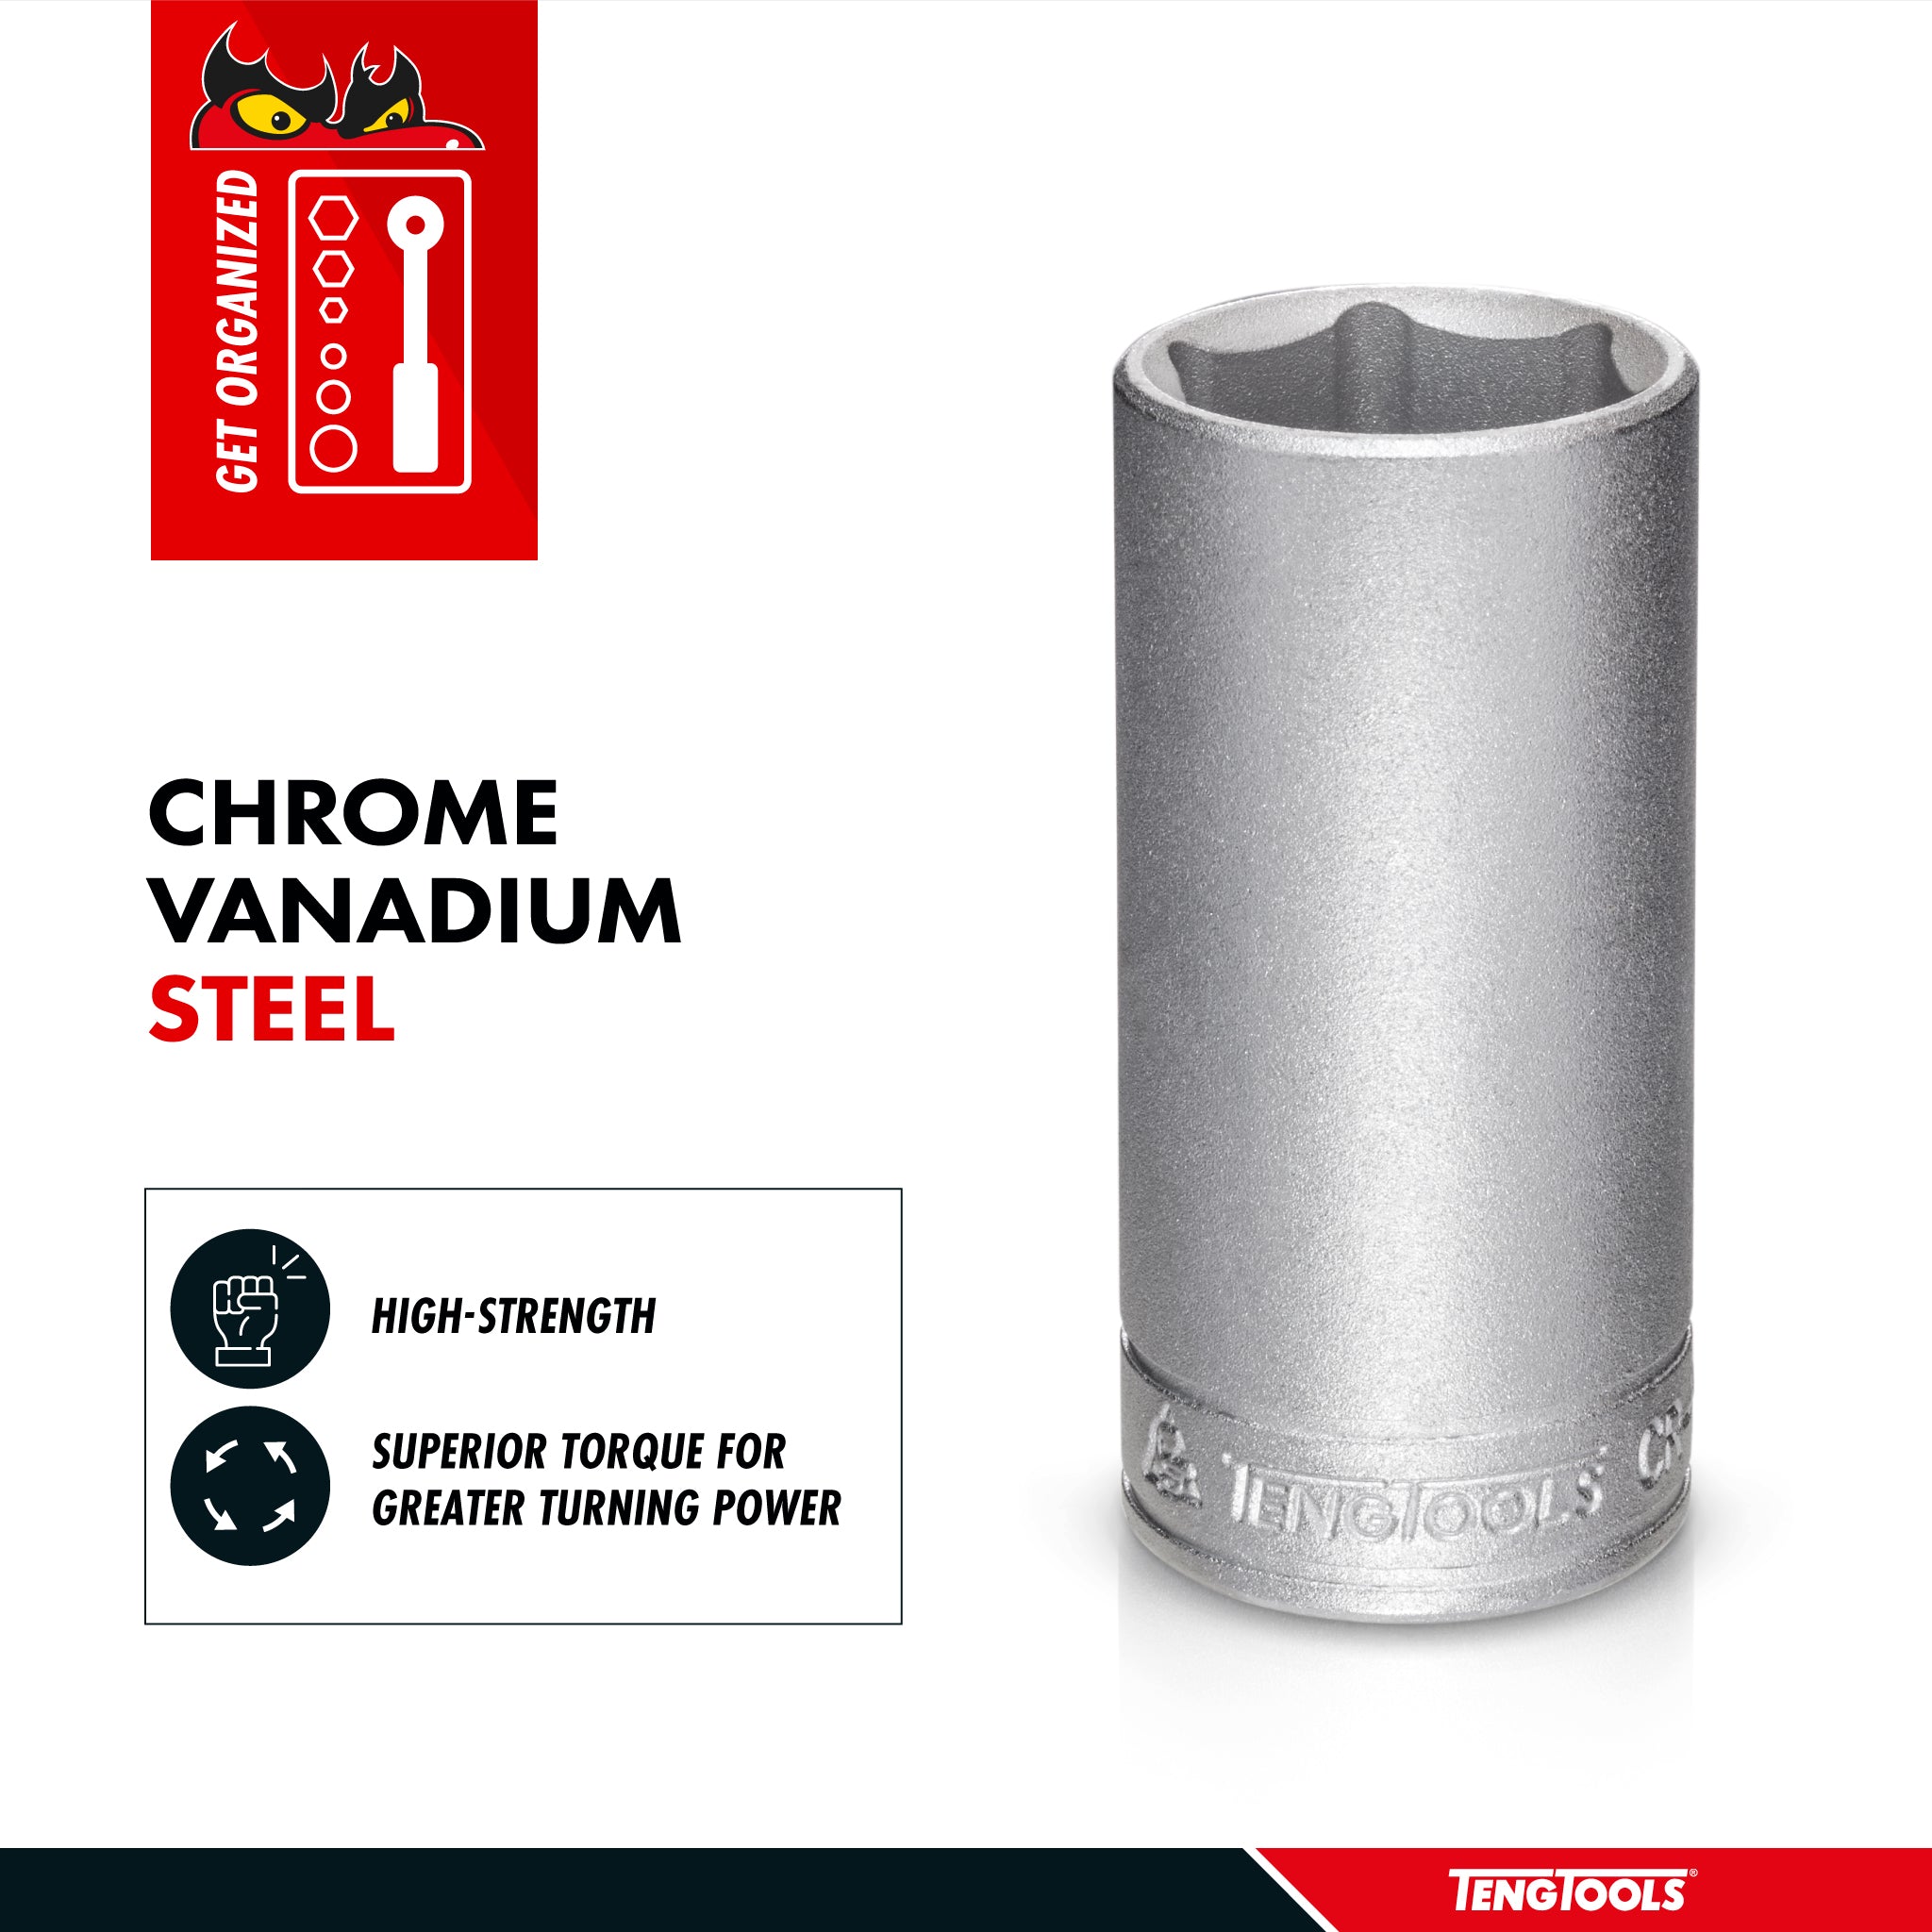 Teng Tools 1/4 Inch Drive 6 Point Metric Deep Chrome Vanadium Sockets - 7mm